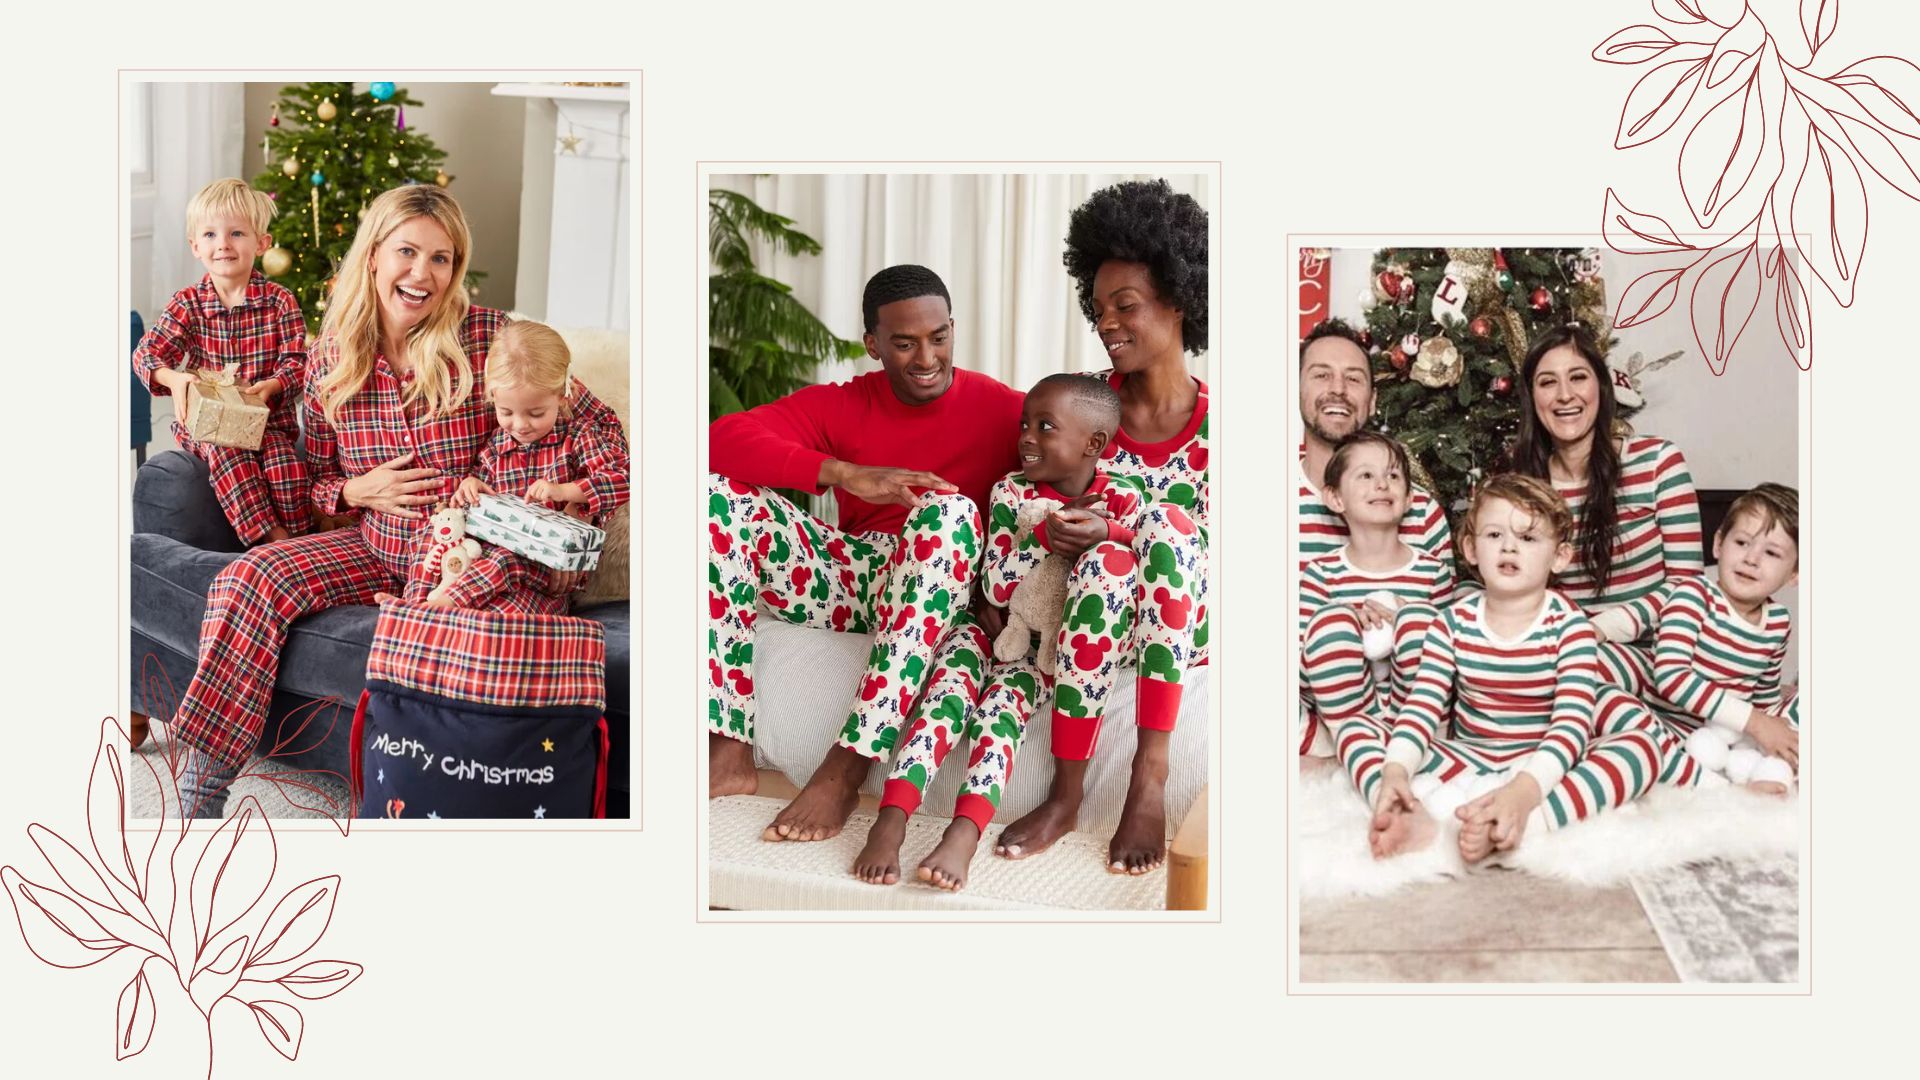 Family Pajamas Matching Women's Mix It Jolly Fair Pajamas Set, Created for  Macy's - Macy's